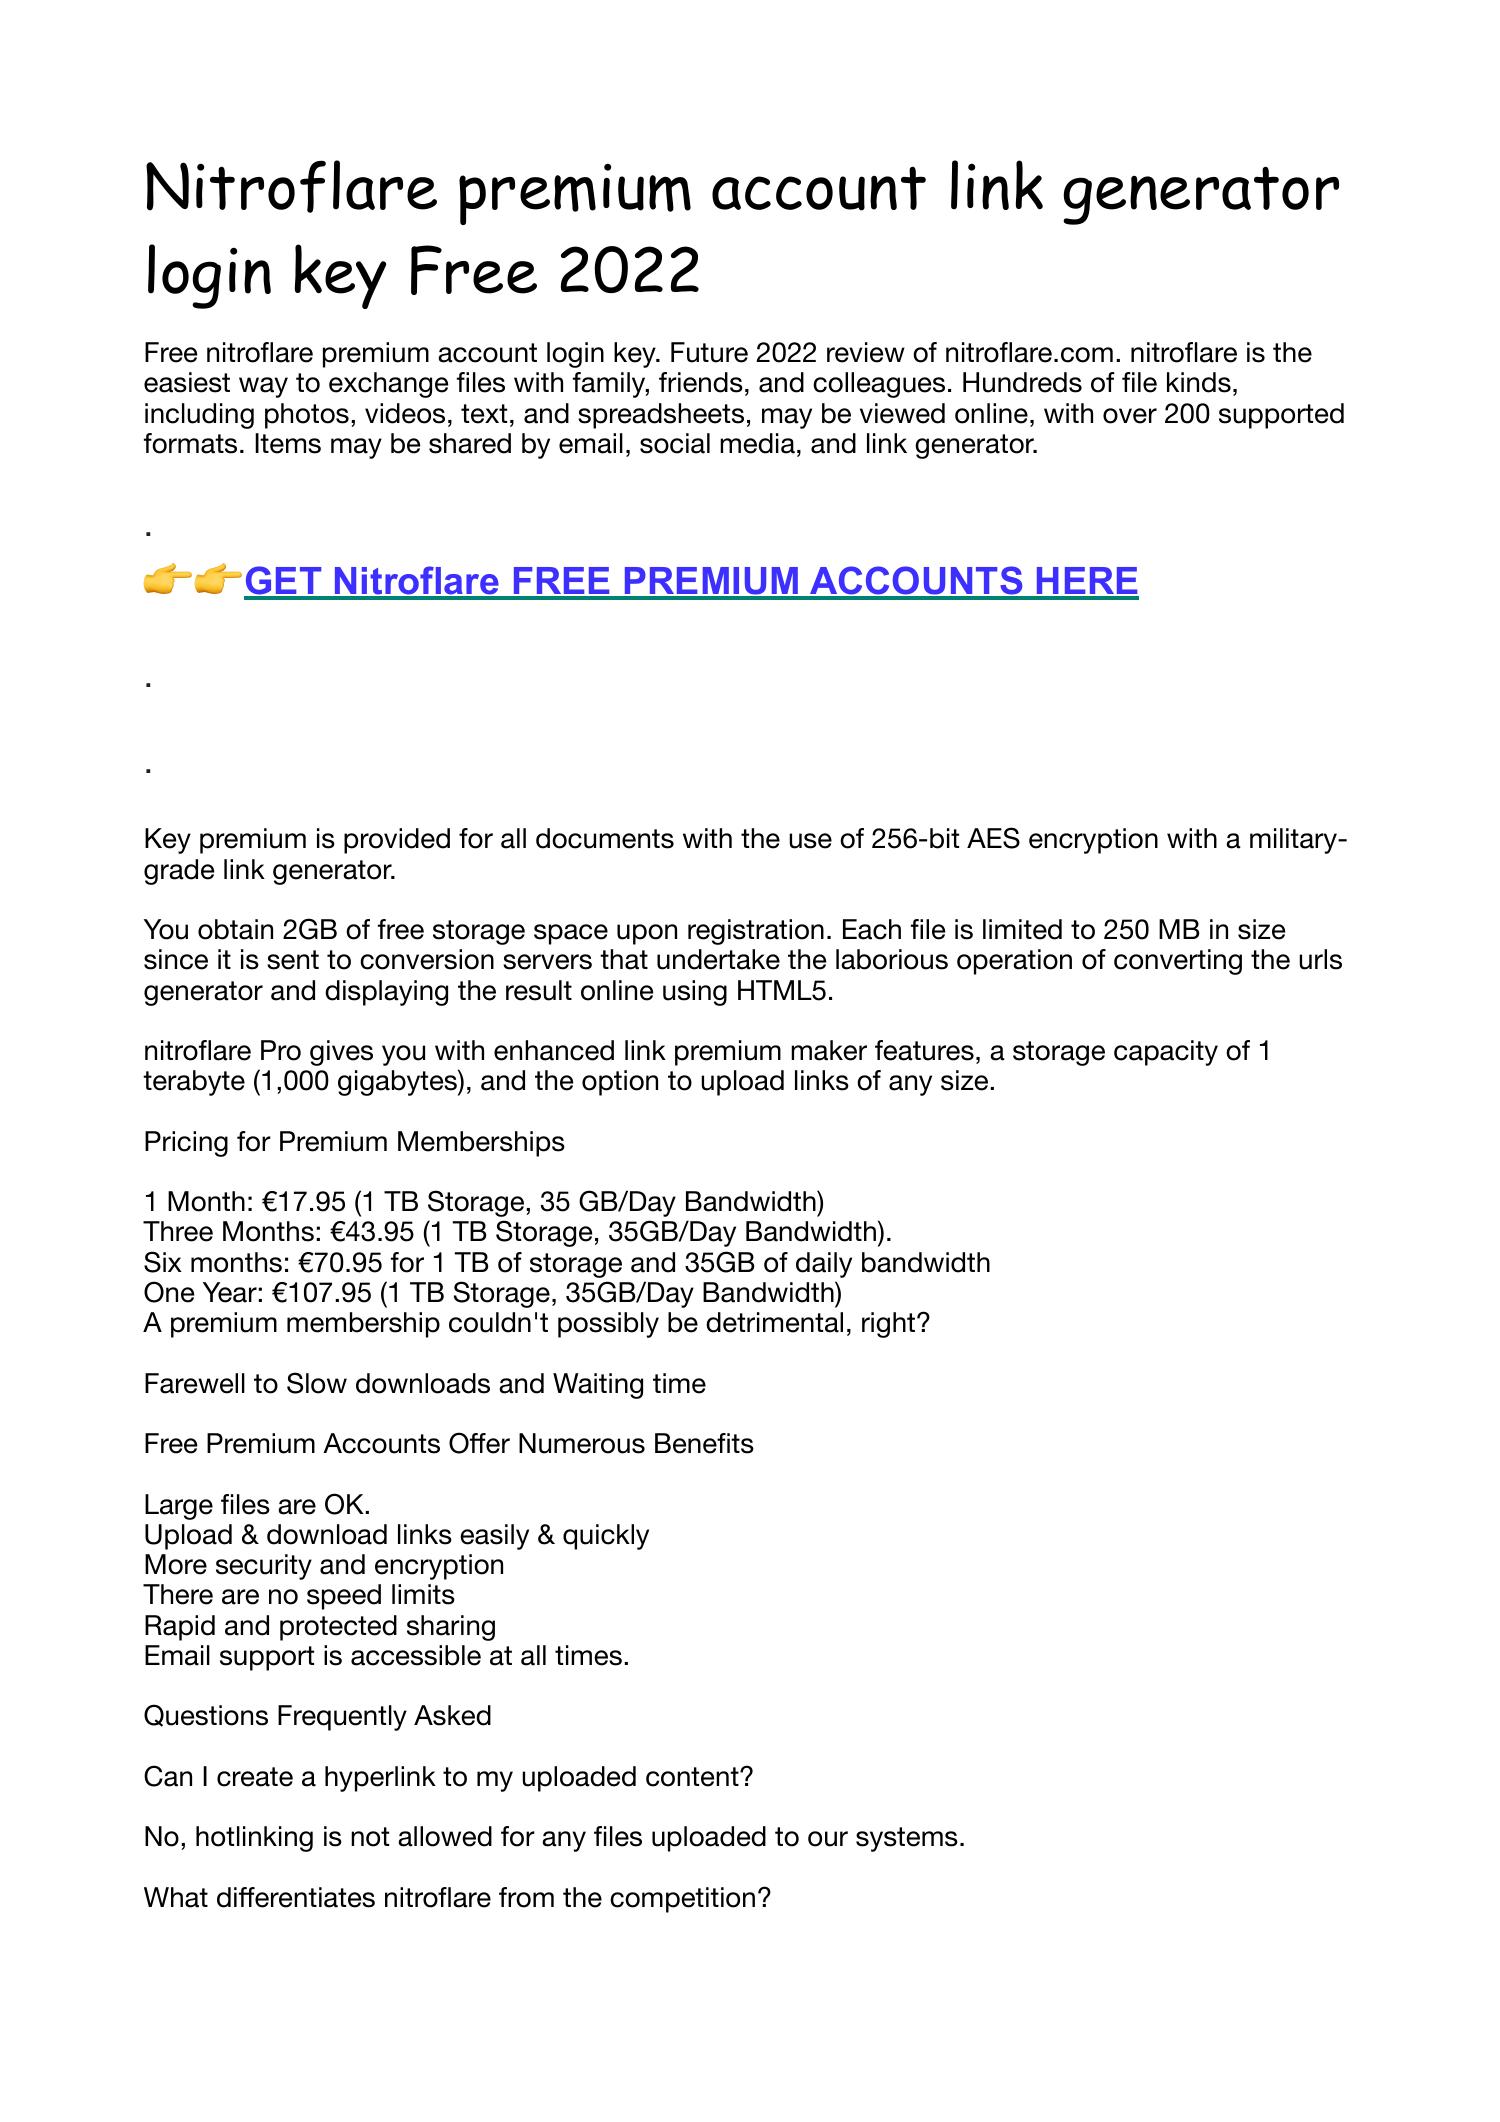 Nitroflare premium account link login key Free.pdf | DocDroid